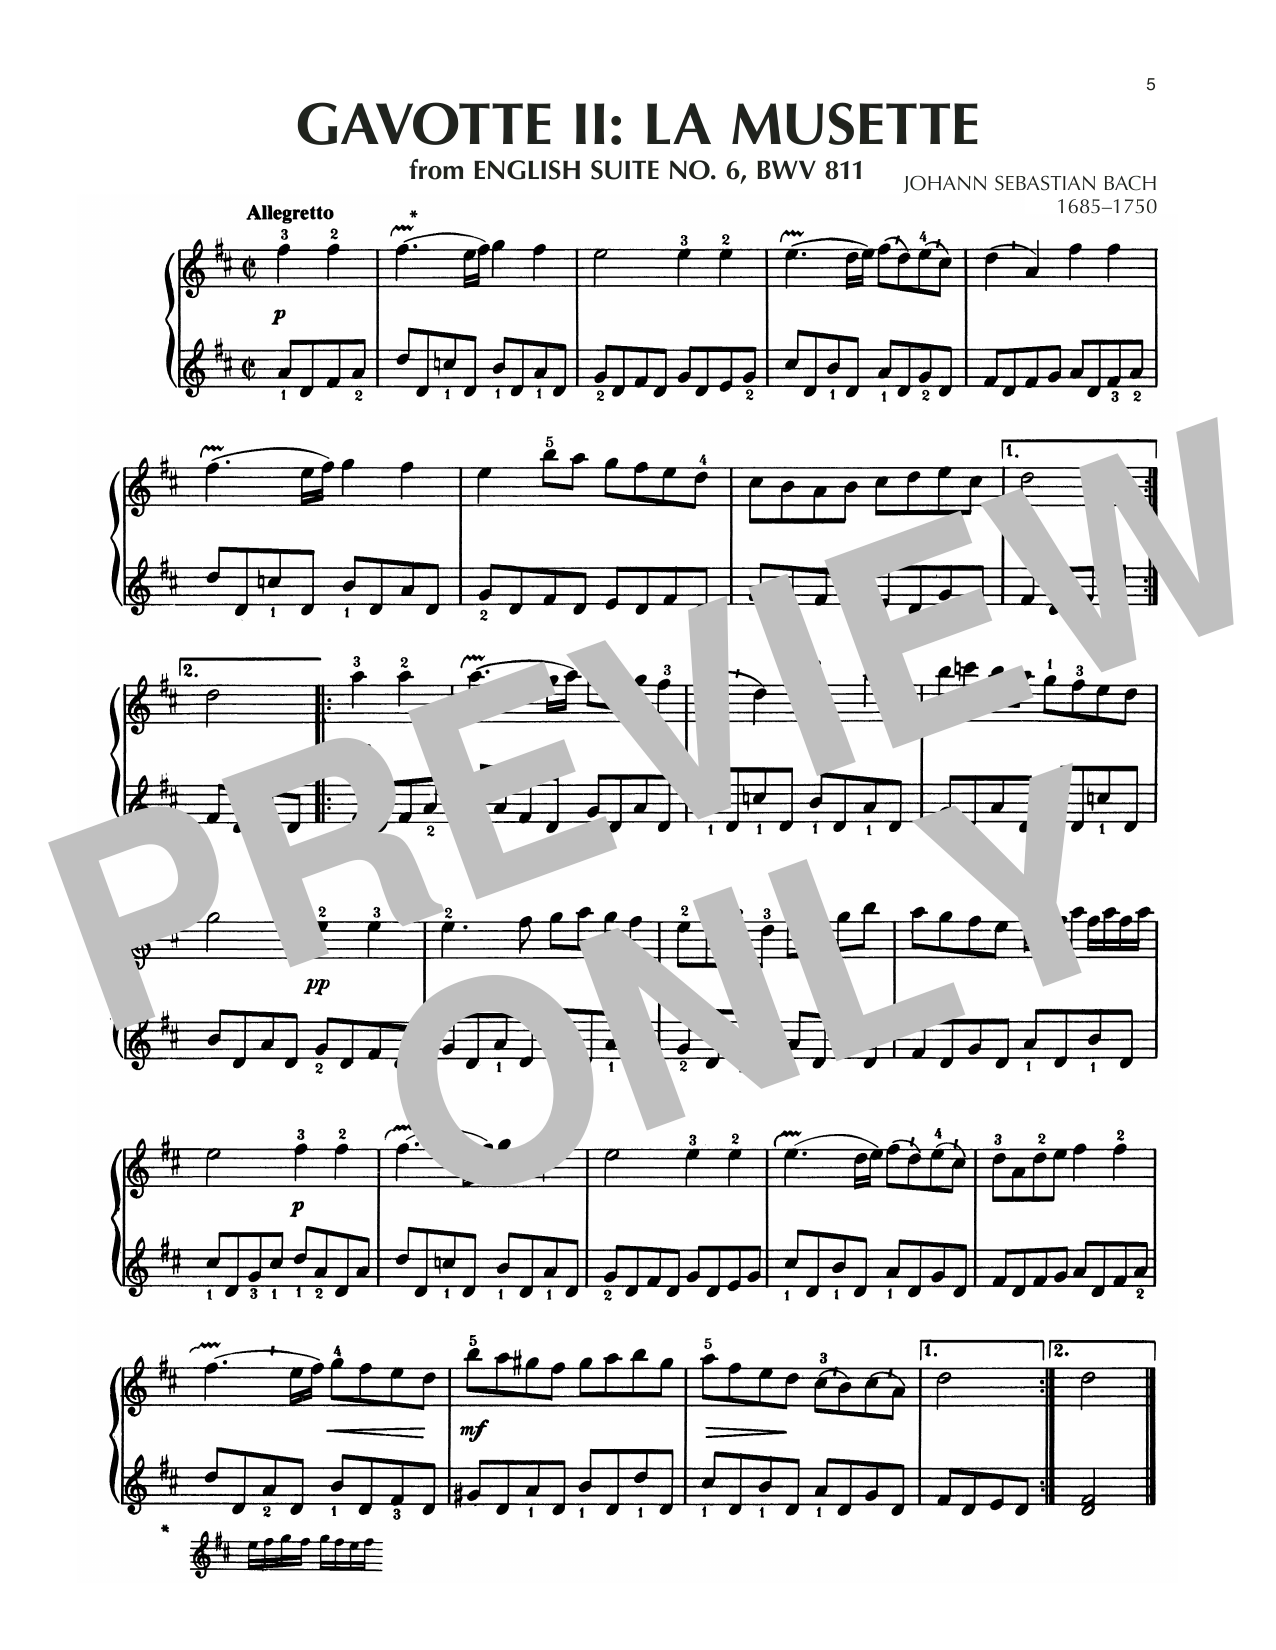 Johann Sebastian Bach Gavotte II In D Major, BWV 811 sheet music notes and chords arranged for Piano Solo